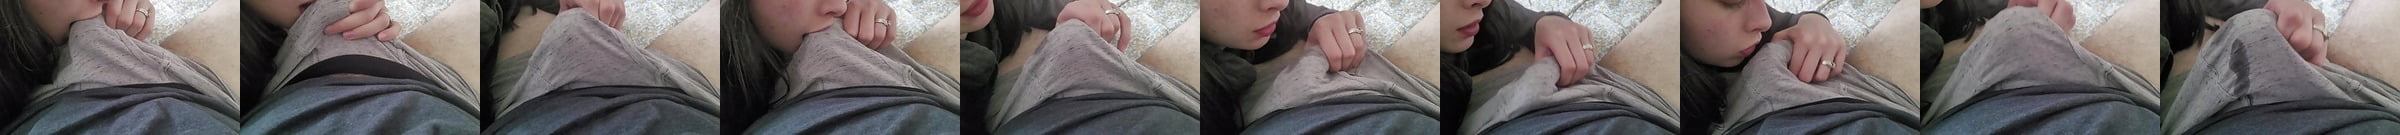 Handjob Over Underwear Cum In Pants Compilation HD Porn F3 XHamster